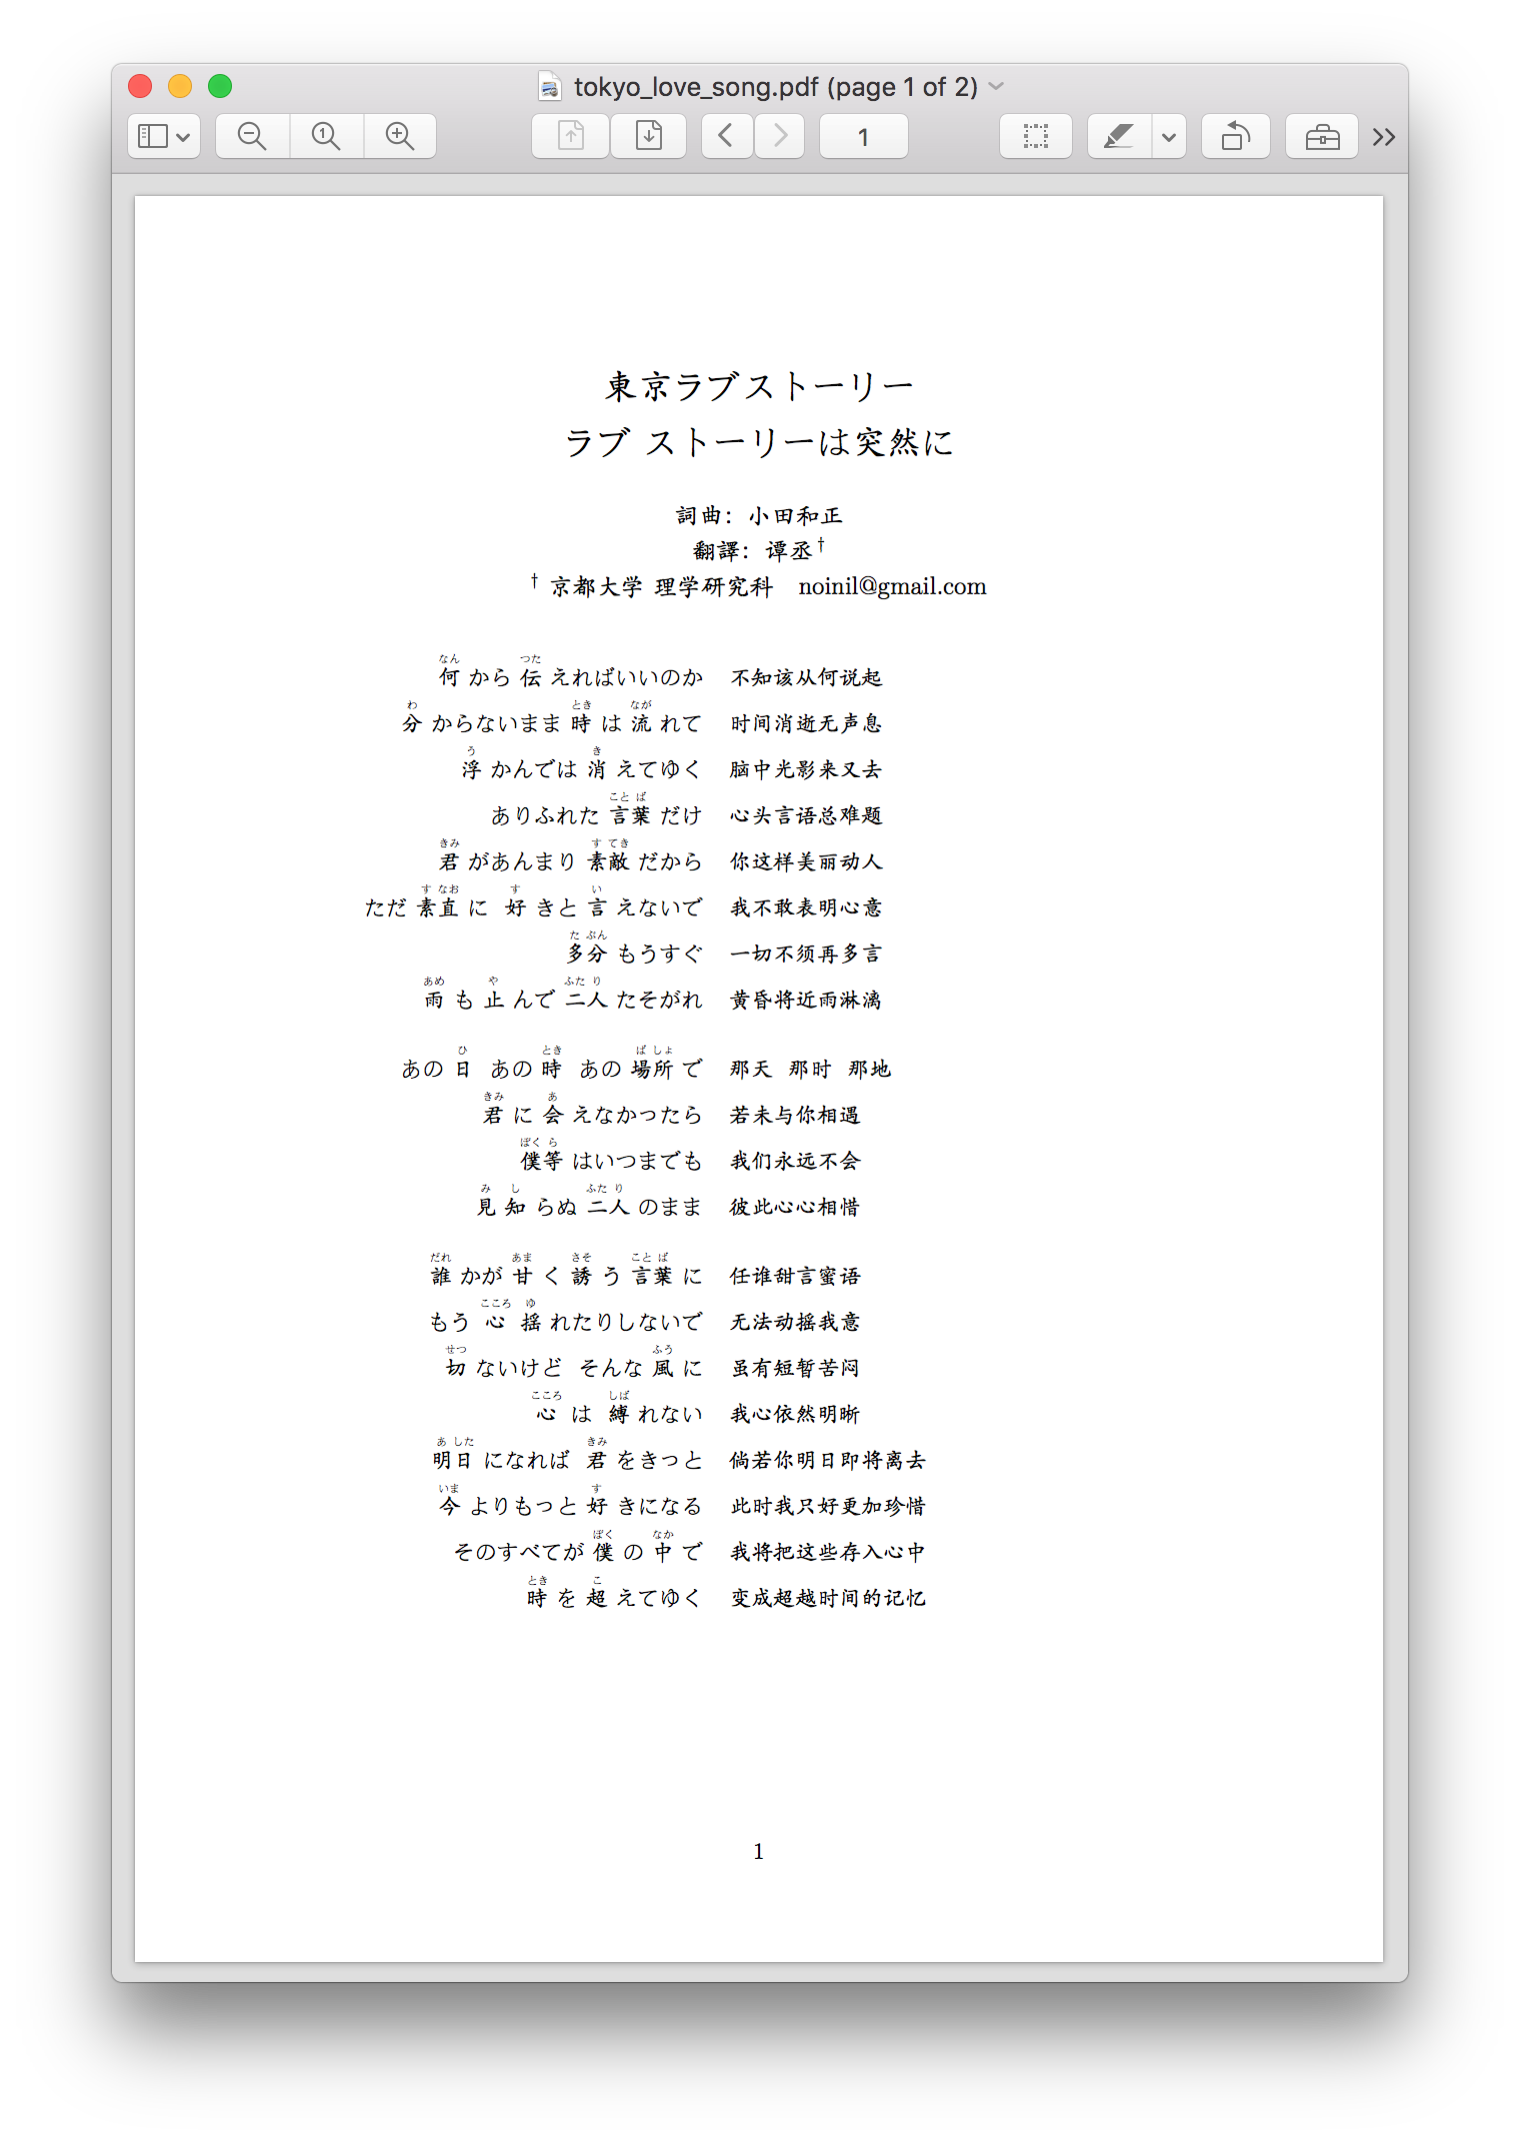 Tokyo love story lyrics typesetting